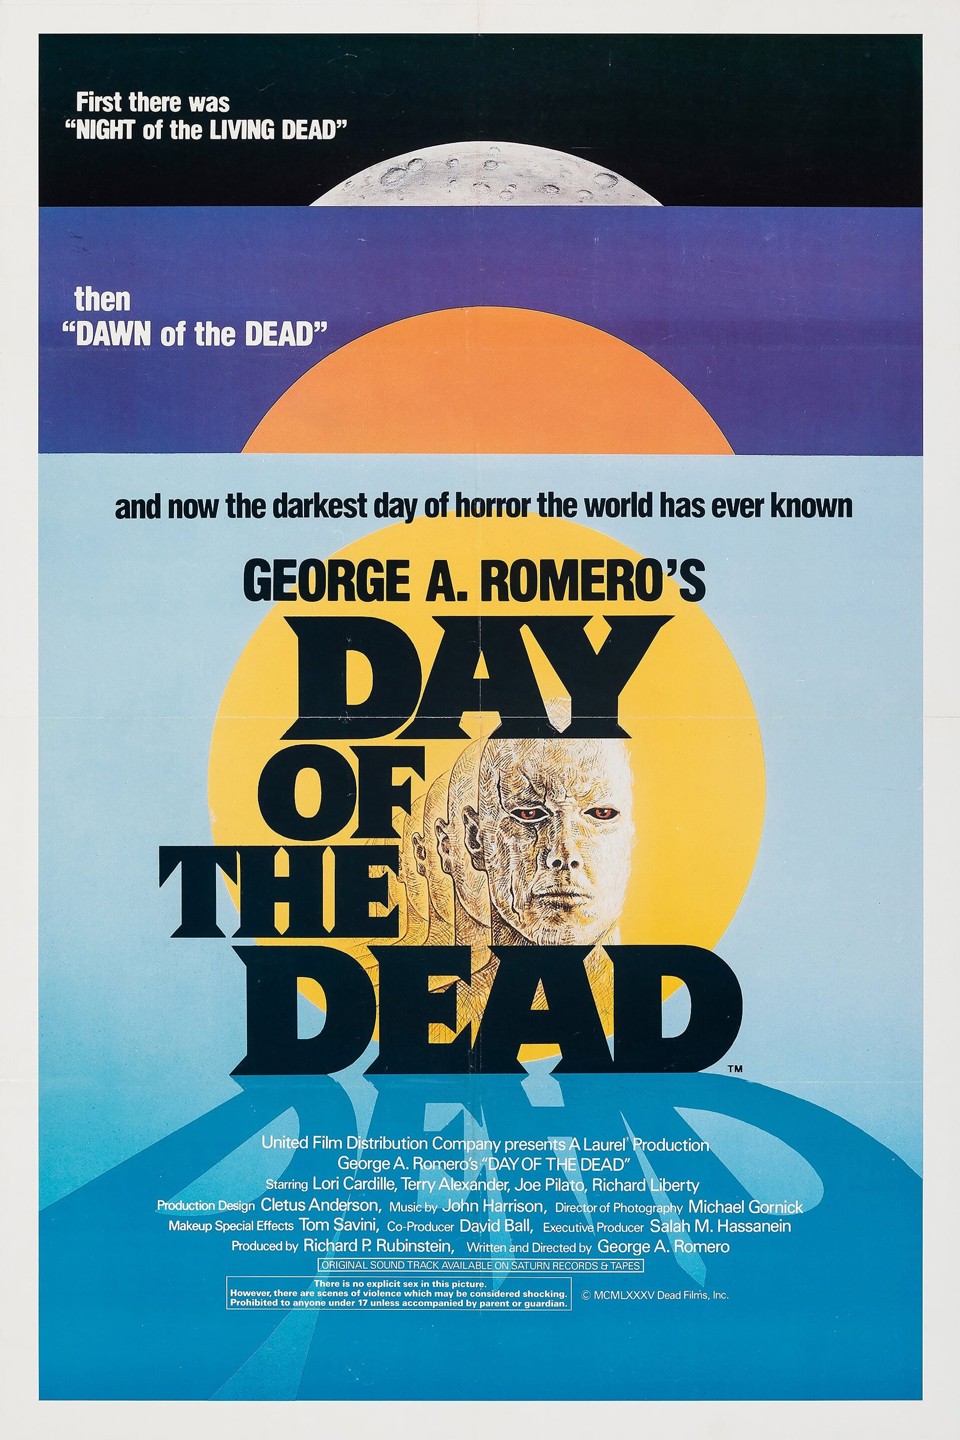 Dead End (1985) - IMDb